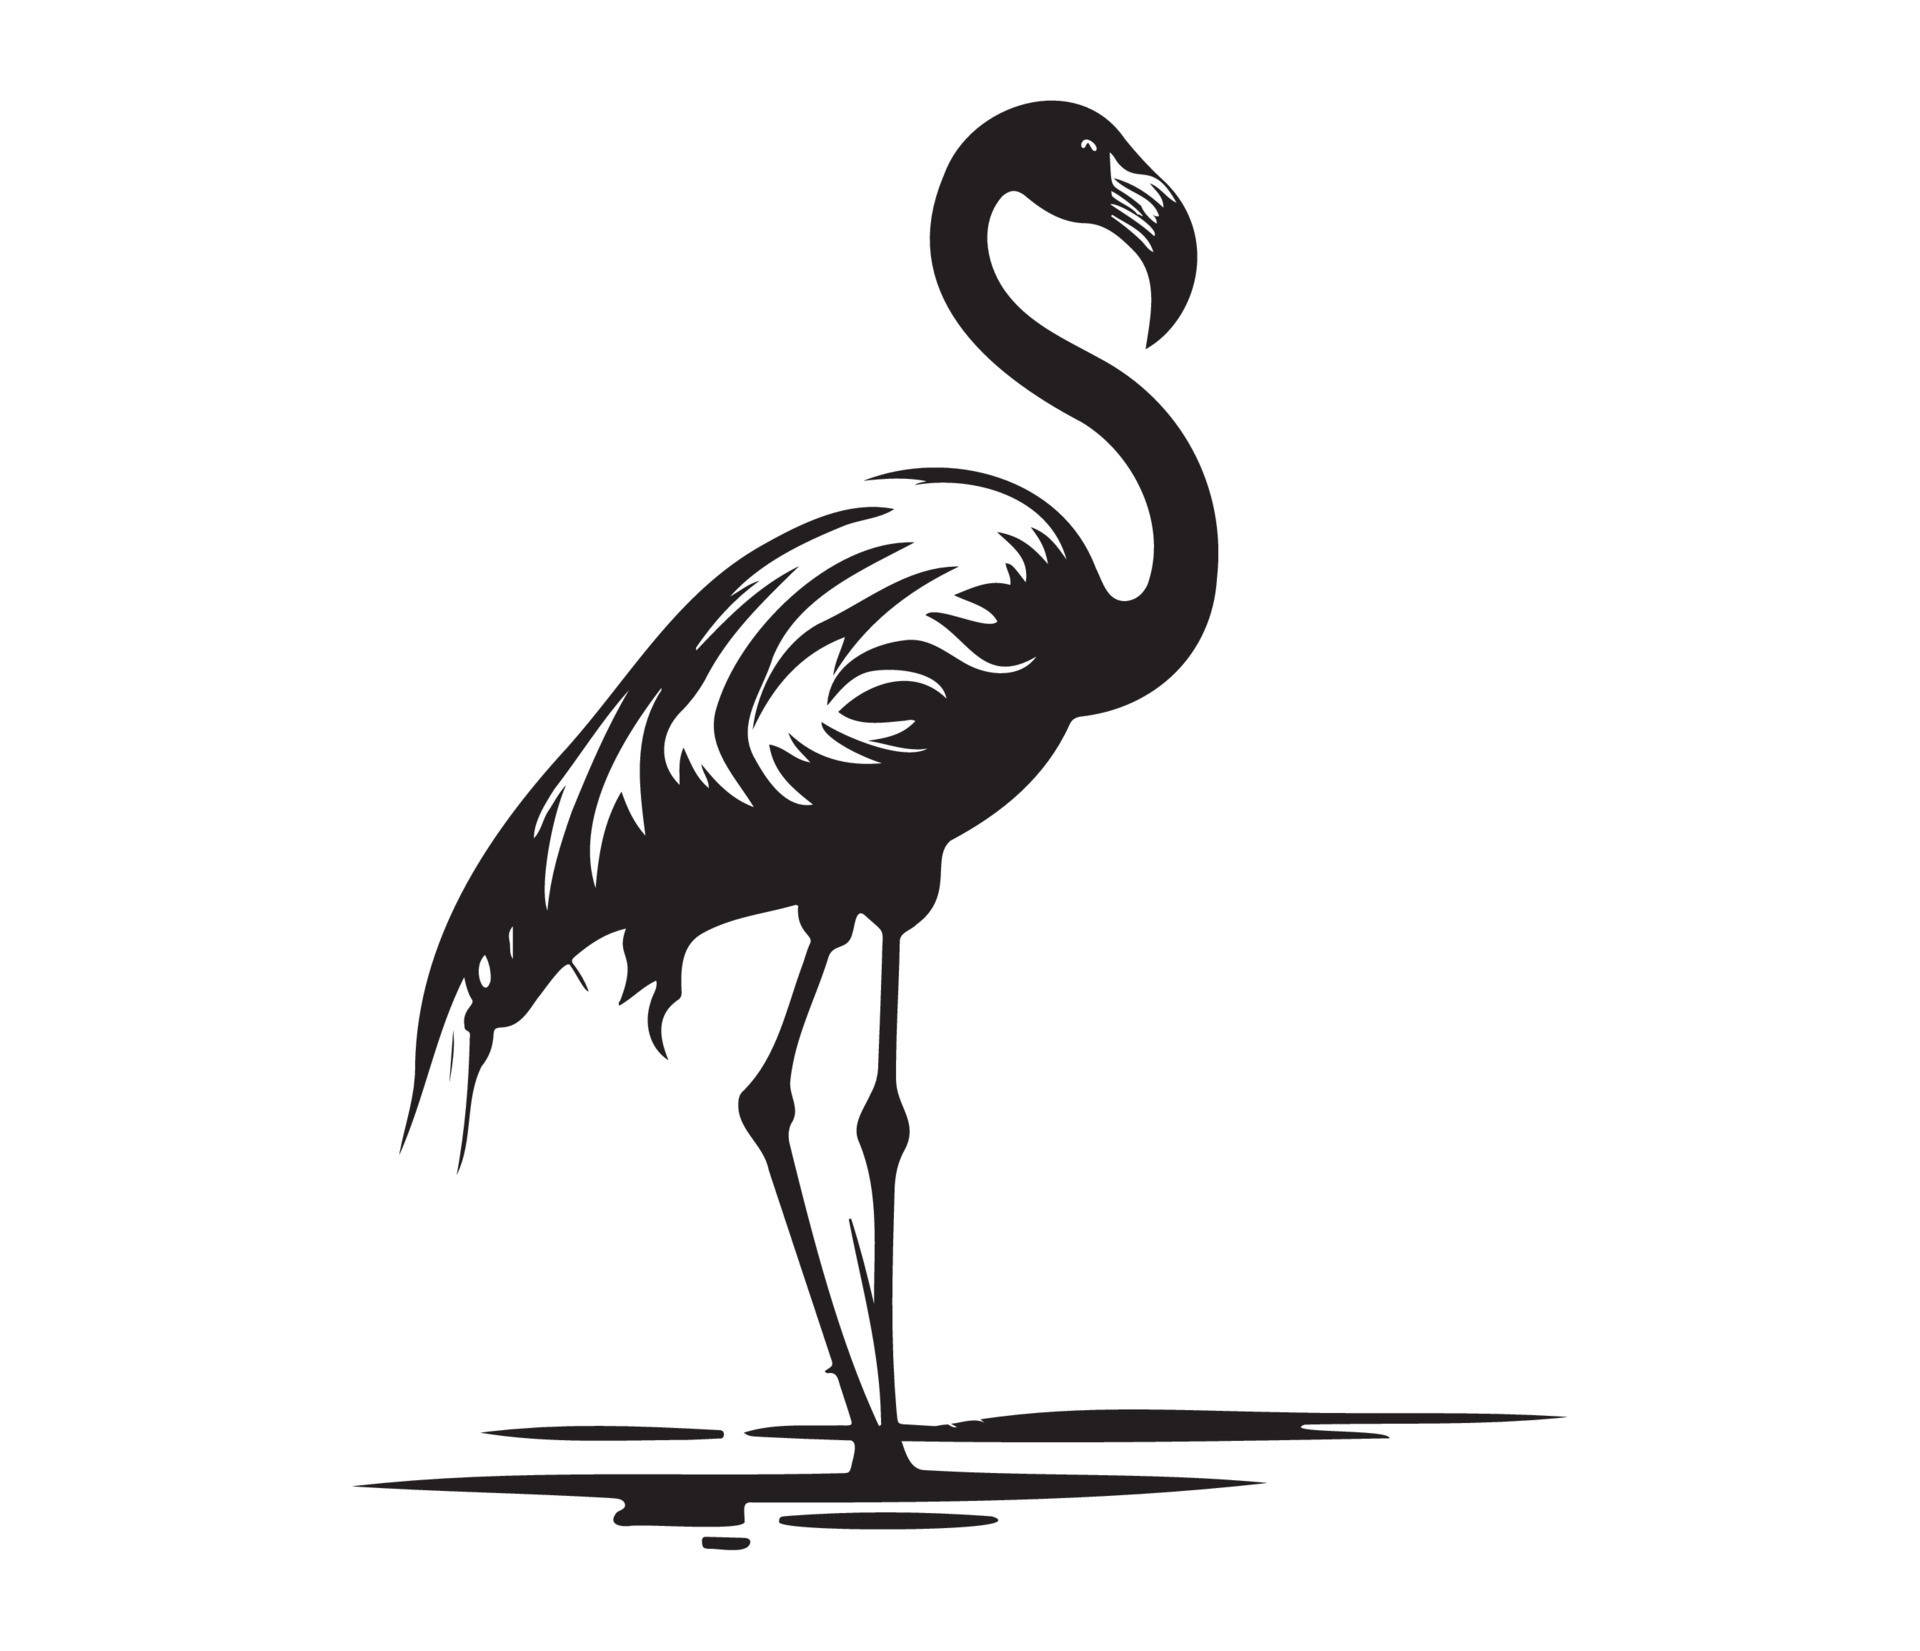 Flamingo, Silhouettes Flamingo, black and white Flamingo vector ...